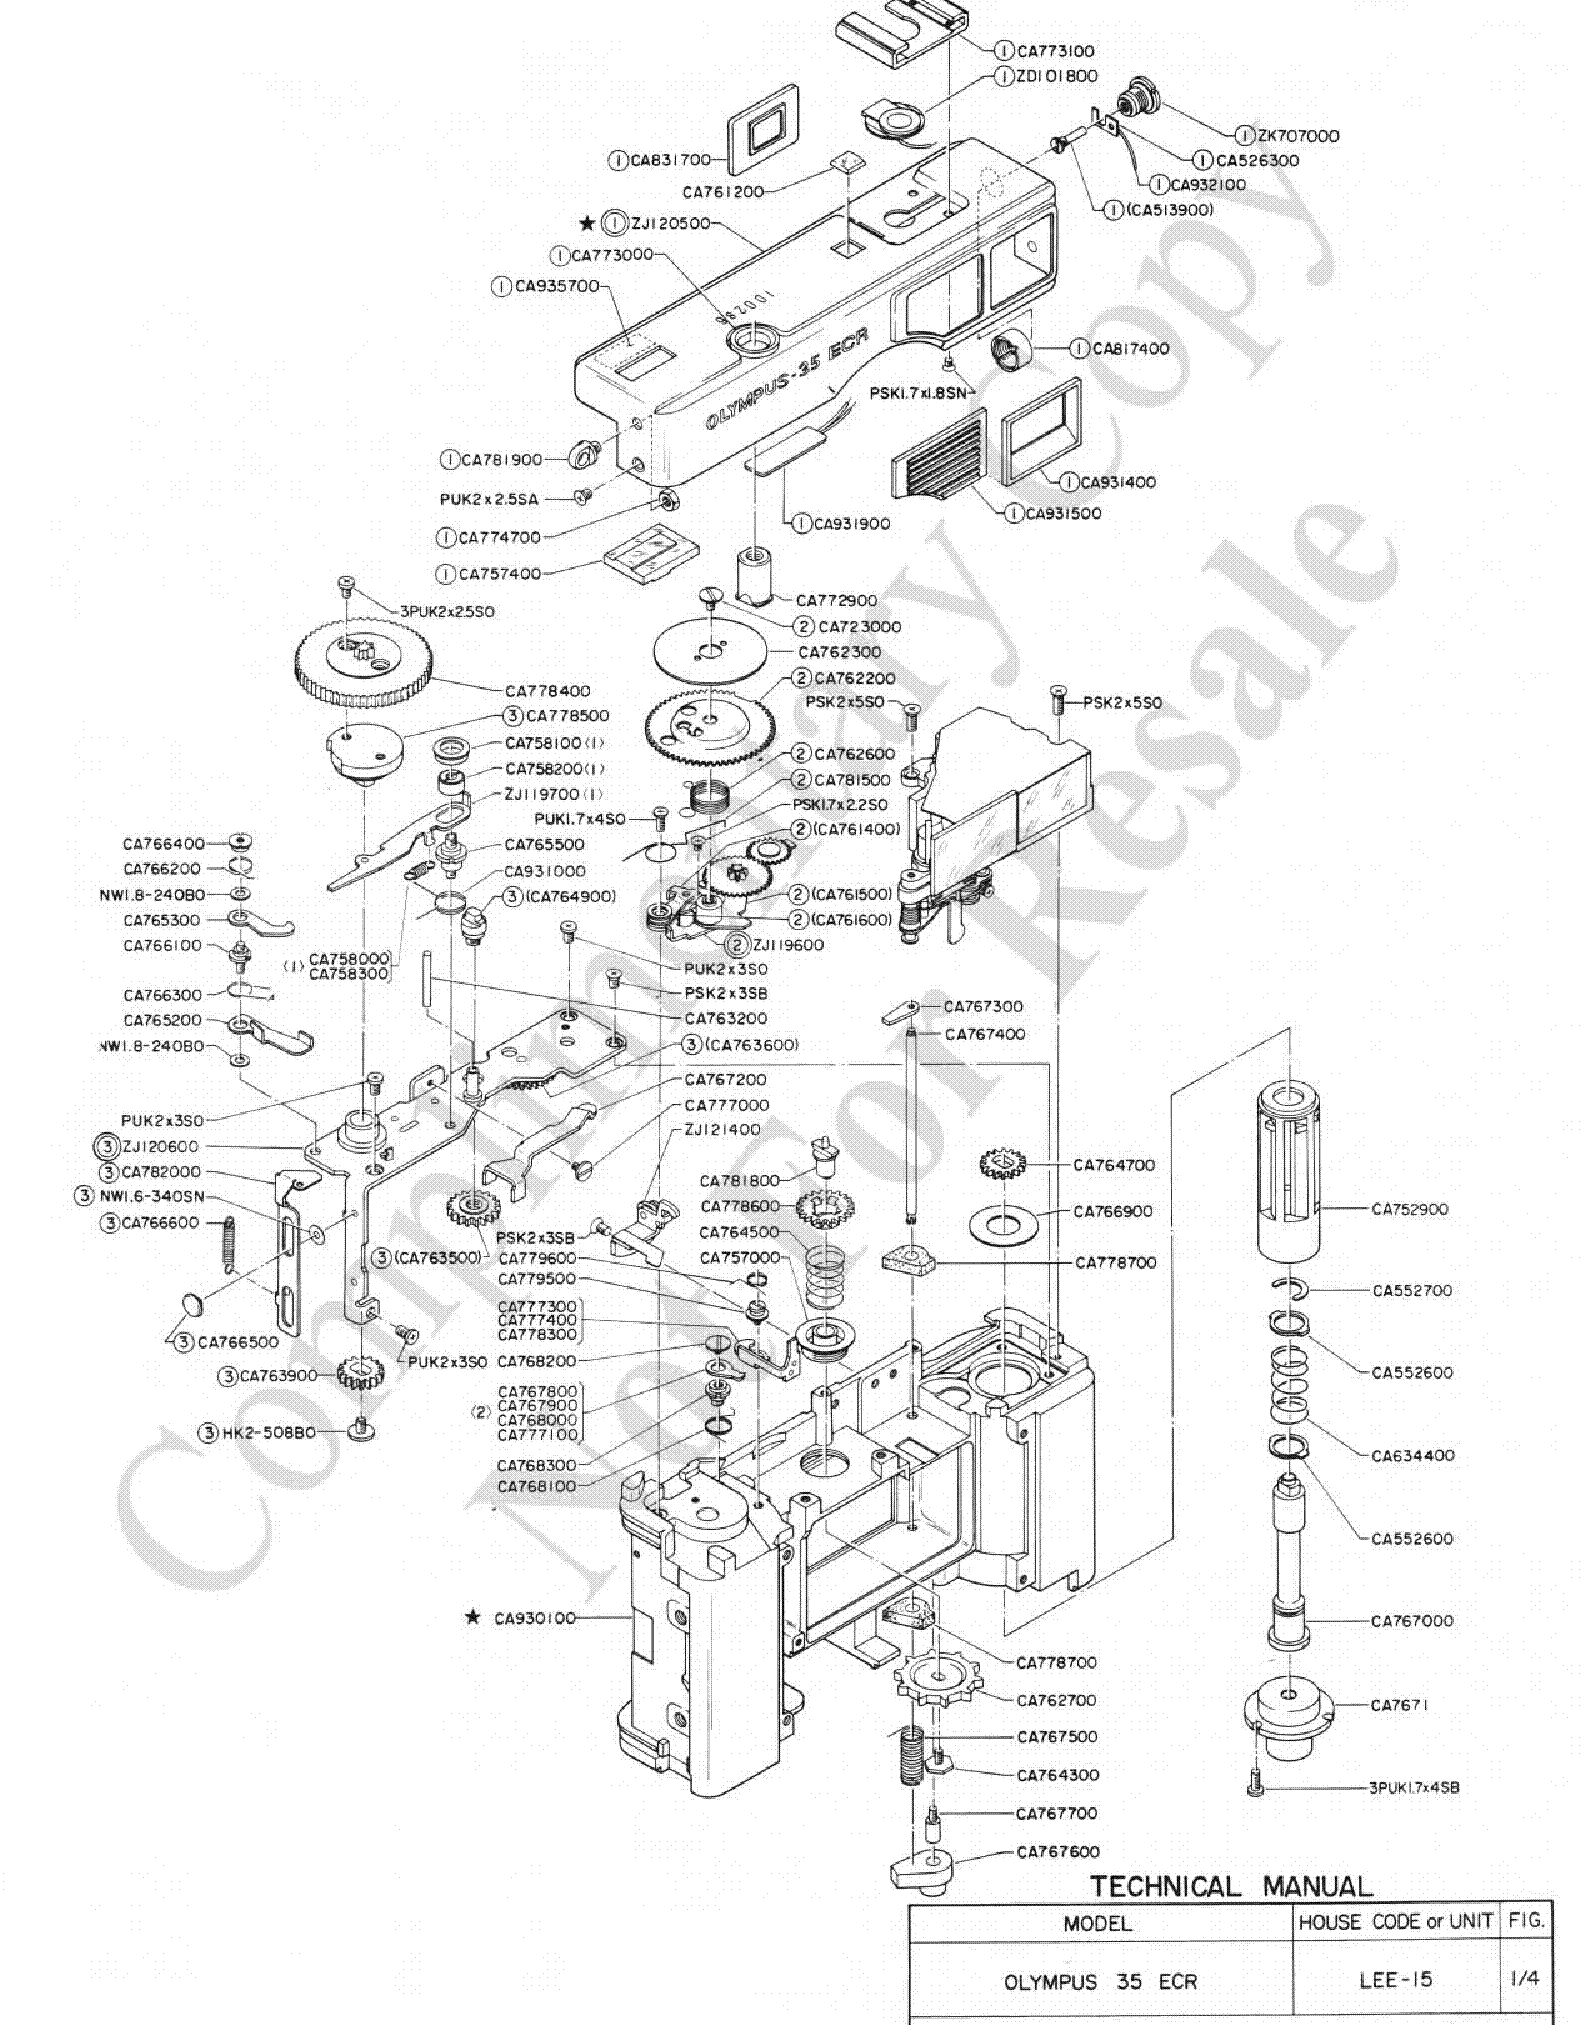 ruger p95 parts diagram